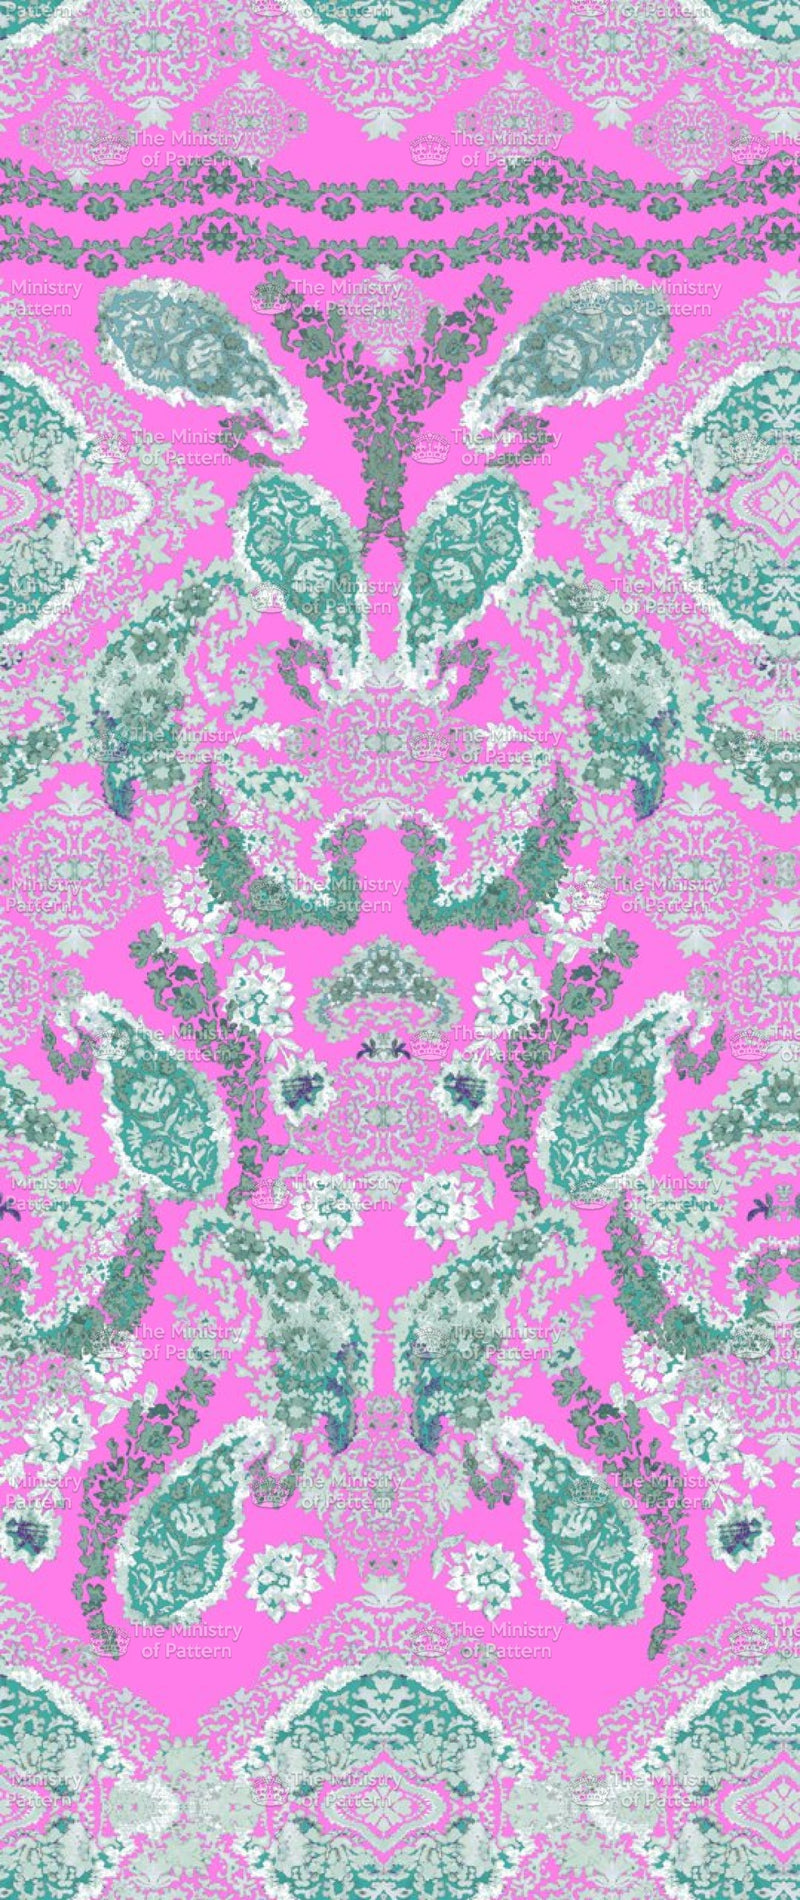 Border Floral Paisley - The Ministry Of Pattern - Patternsforlicensing-textilestudio-printdesignstudio-trendinspiration-digitalprintdesign-exclusivepattern-printtrends-patternoftheweek